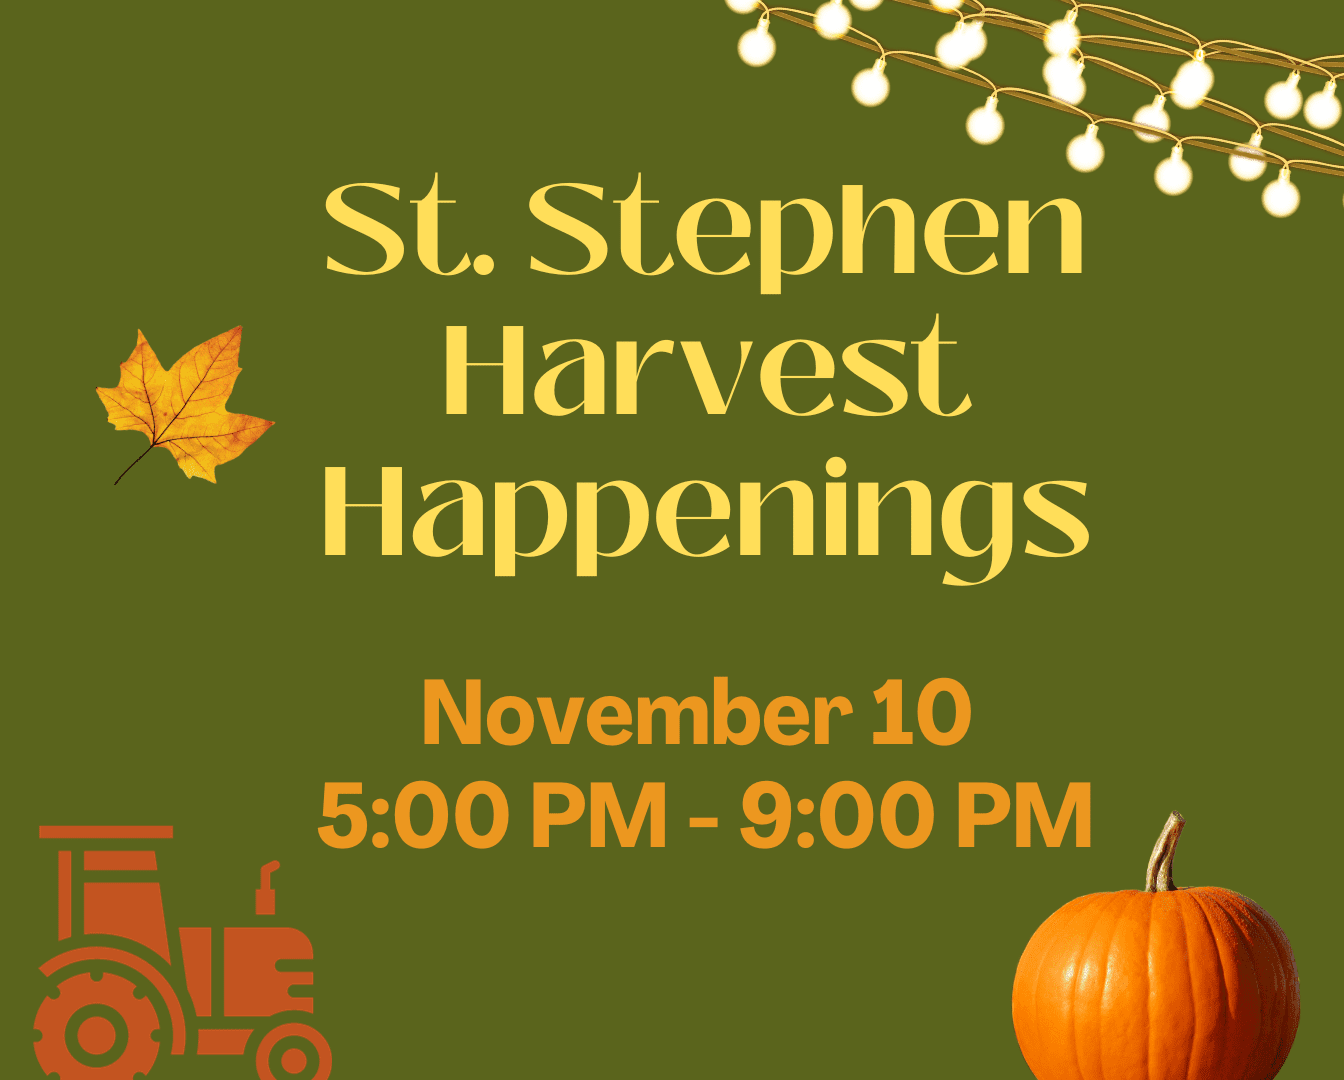 Harvest Happenings at St. Stephen